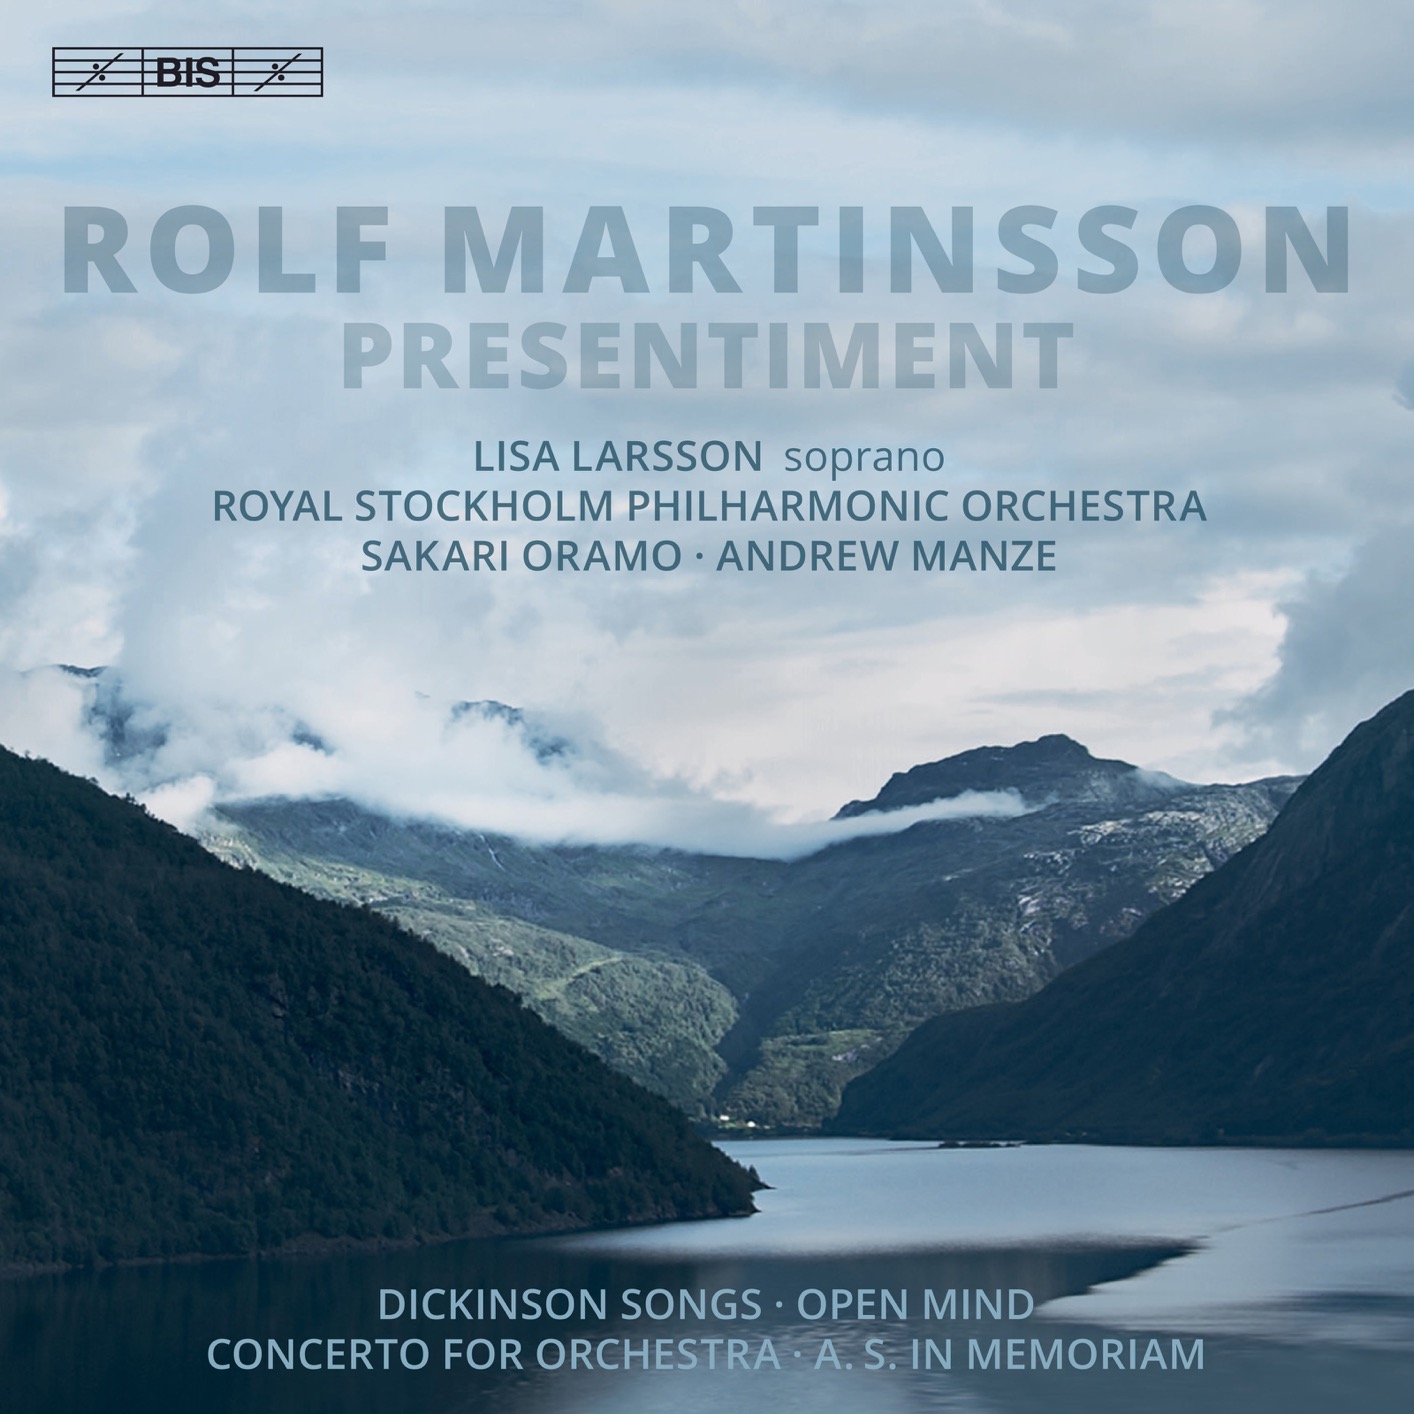 Royal Stockholm Philharmonic Orchestra & Andrew Manze - Martinsson: Presentiment (2018) [FLAC 24bit/96kHz]